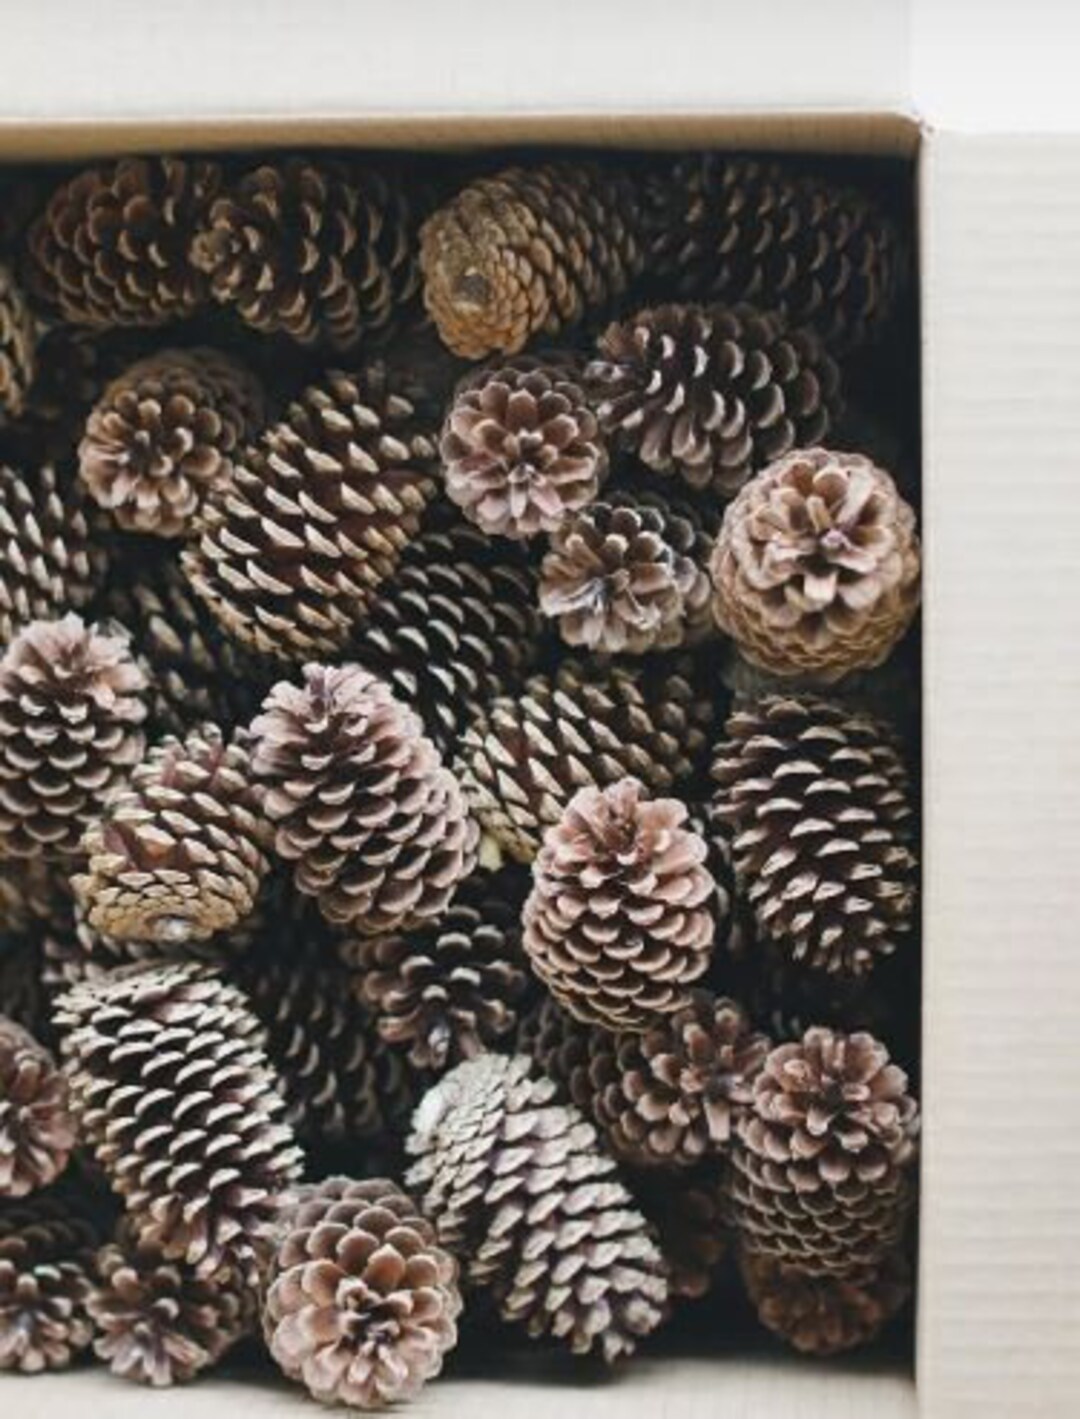 Box of 100 Natural Medium Pine Cones - 3-5 Long